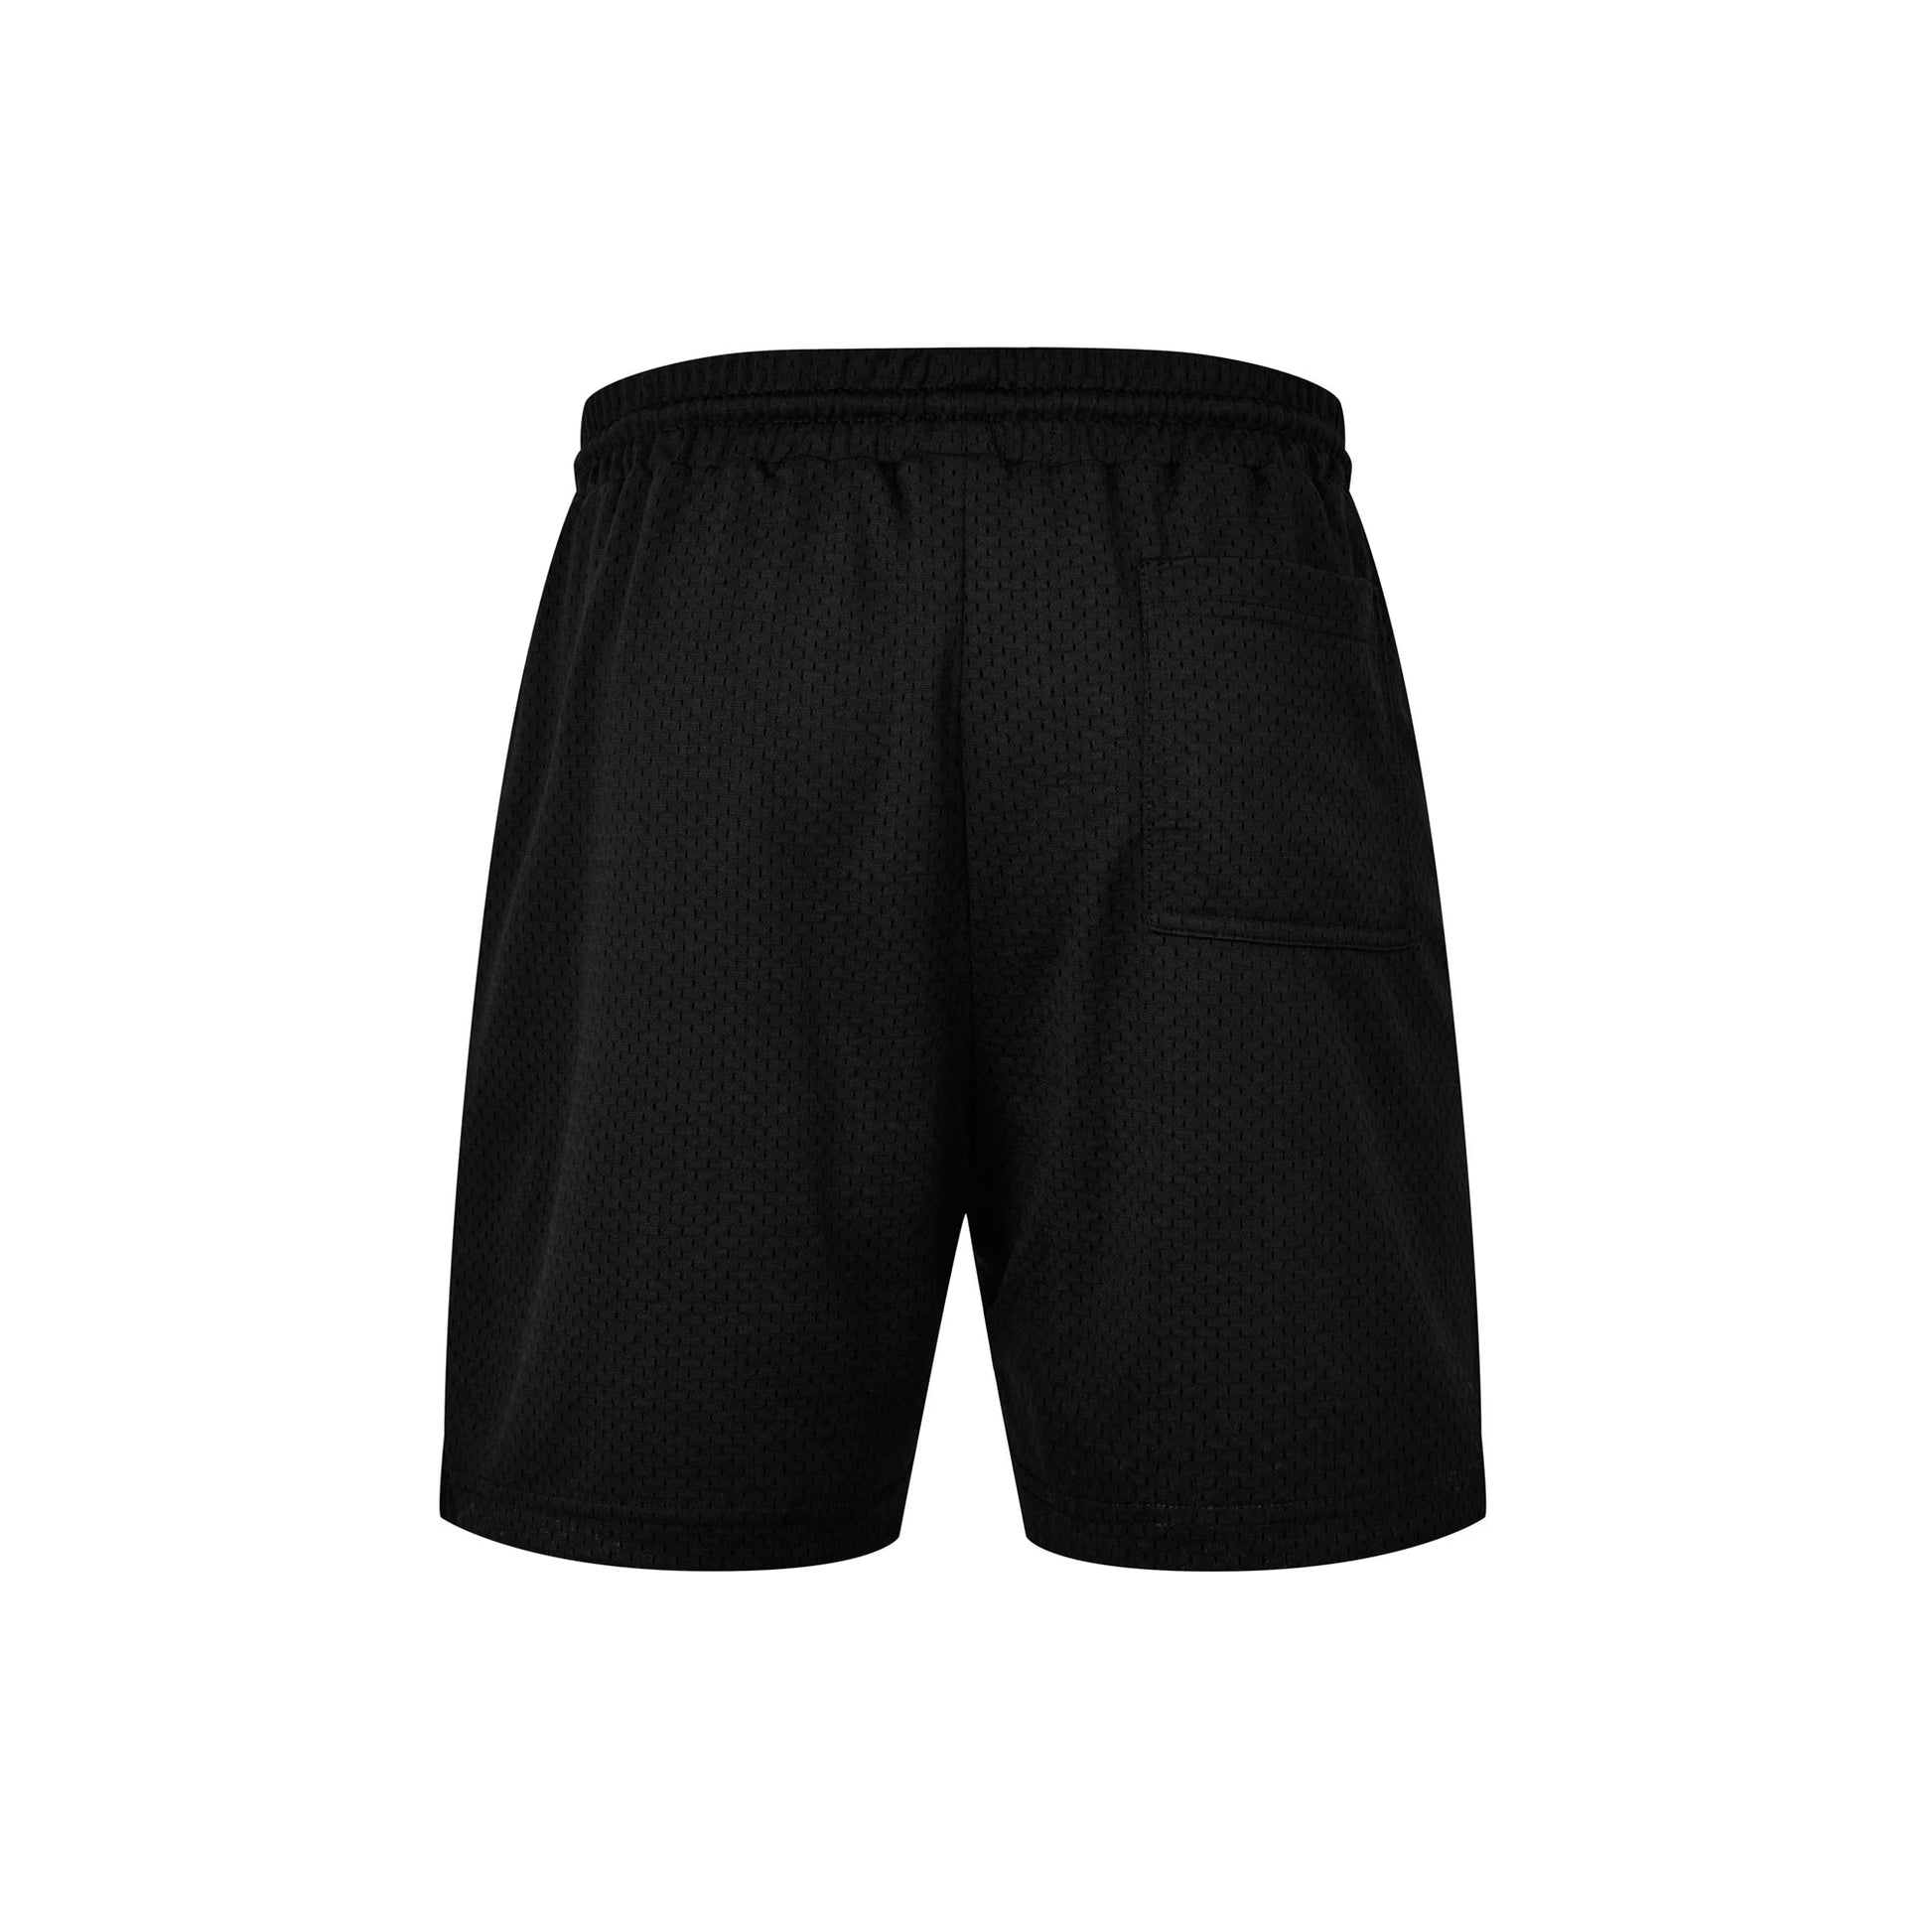 Represent Owners Club Mesh Short - 01 Black - Escape Menswear